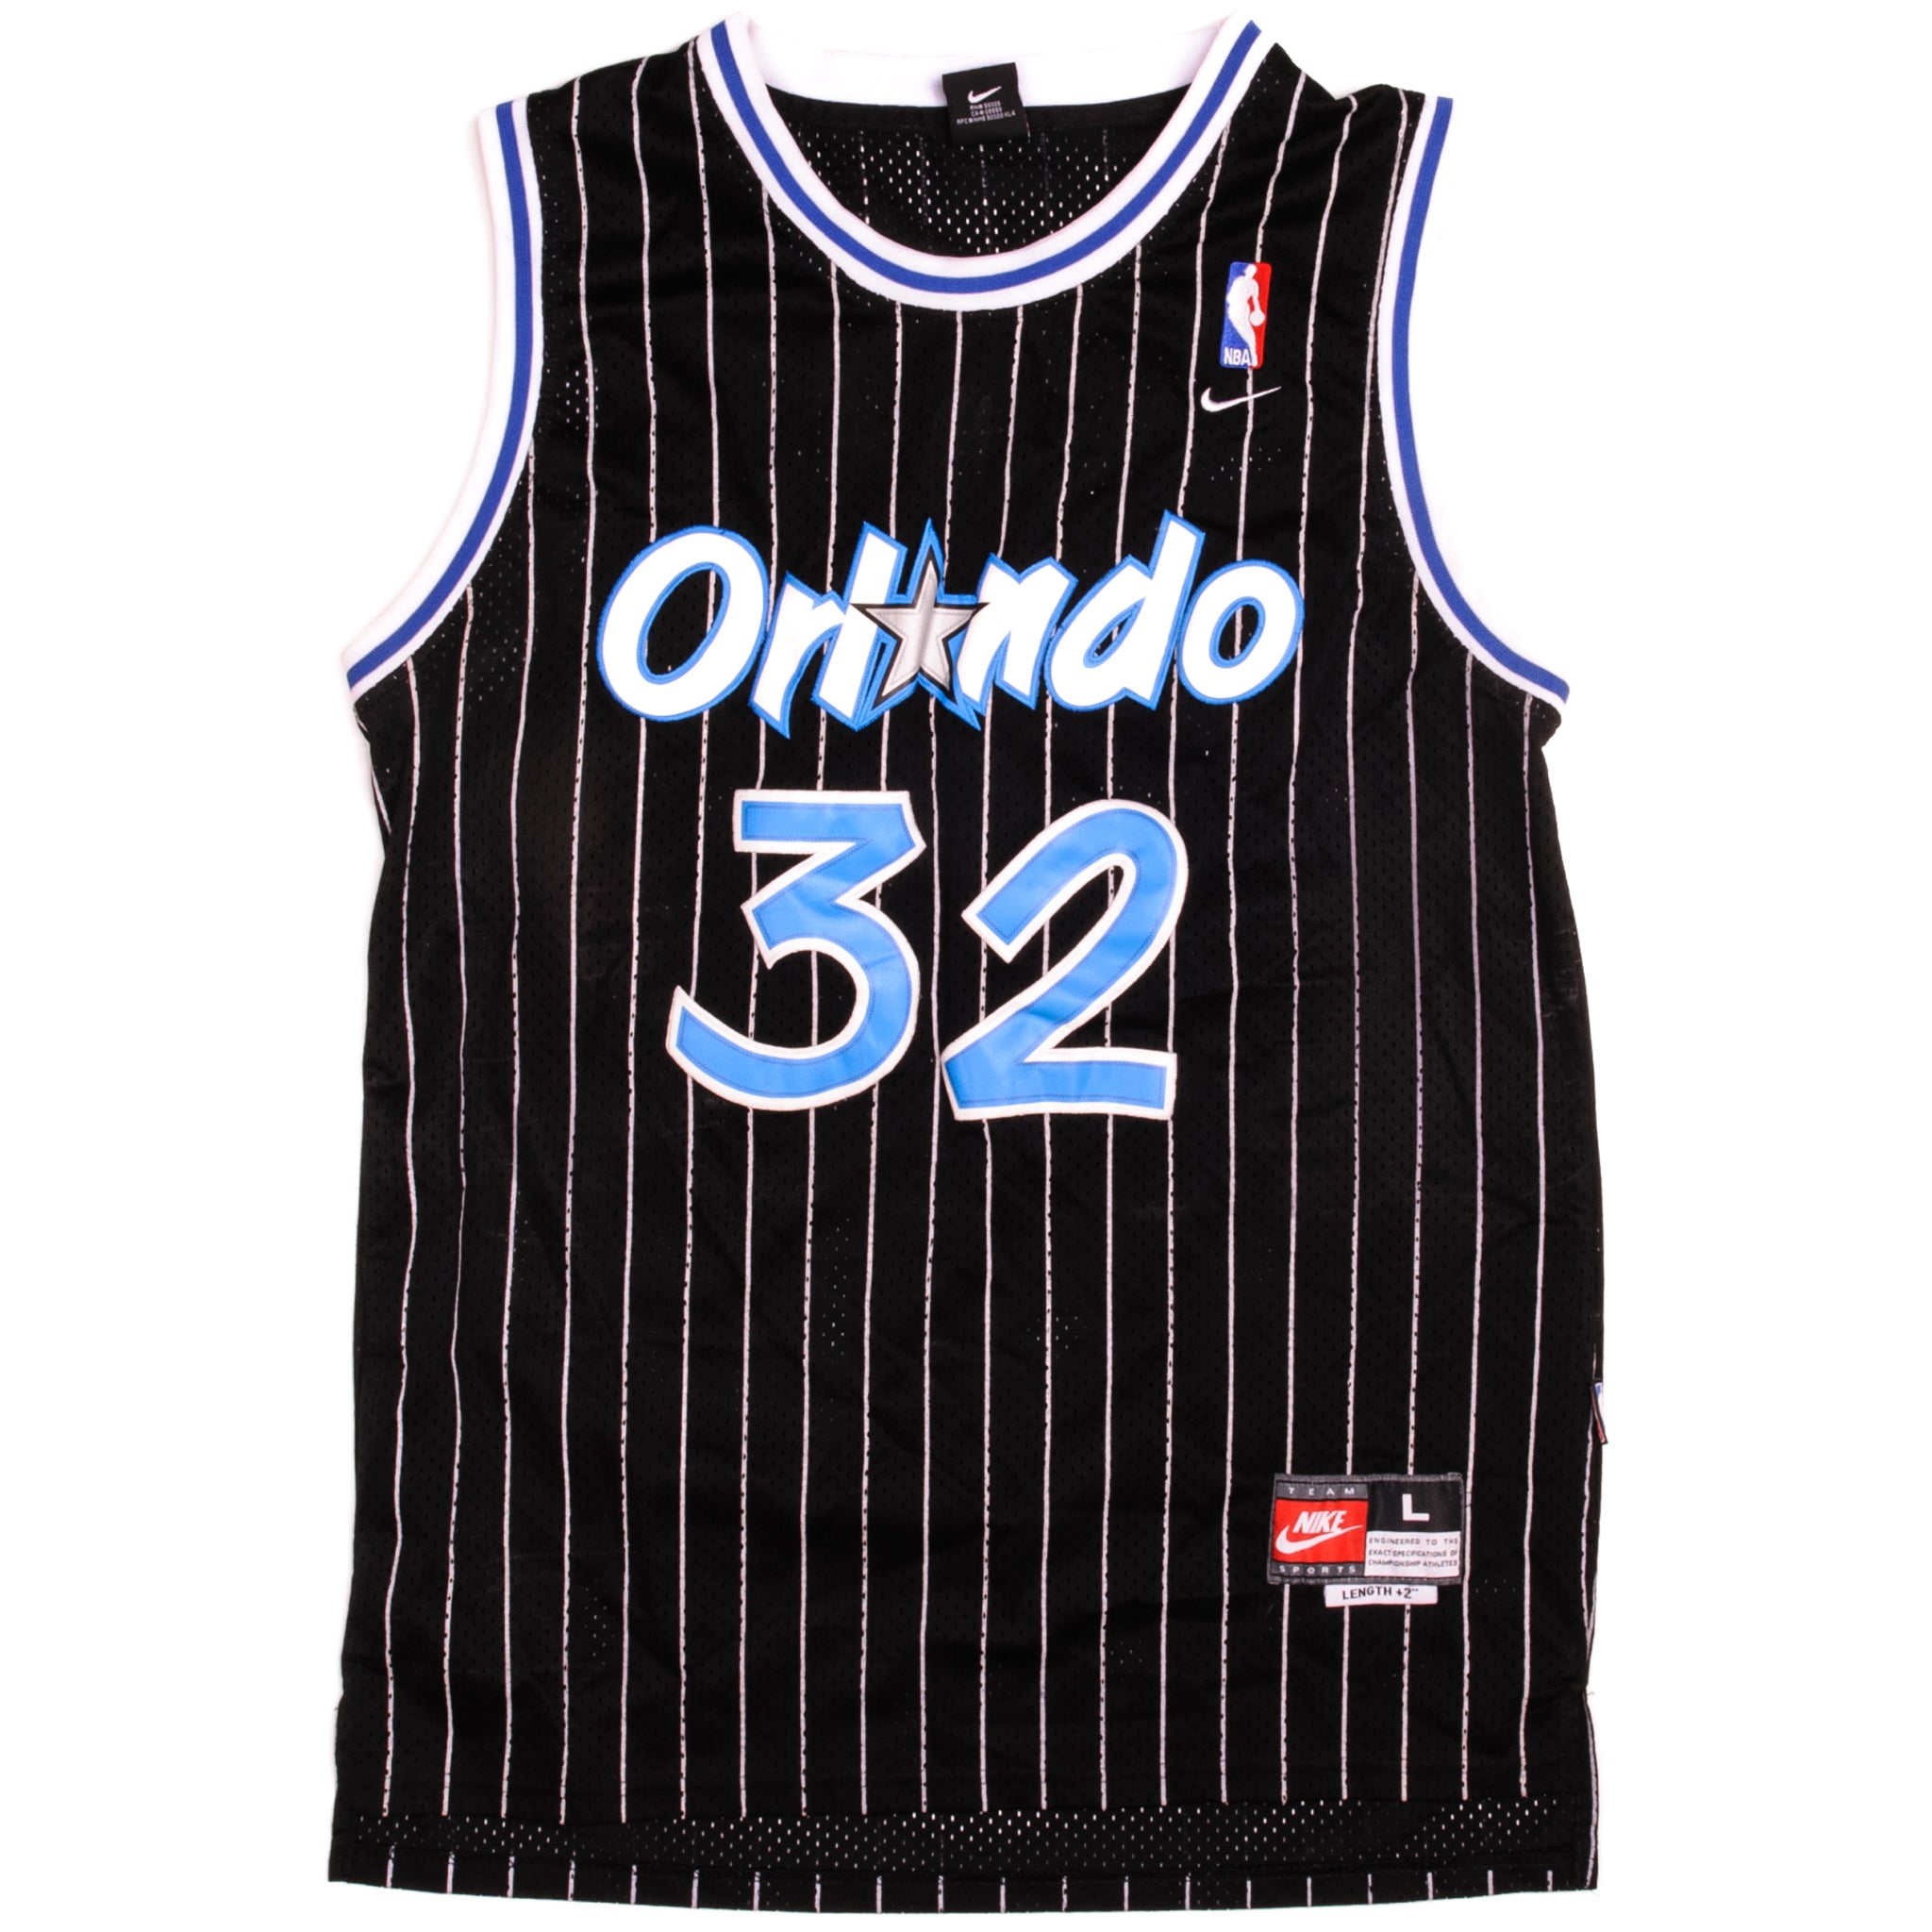 LegacyVintage99 Vintage Orlando Magic Shaquille O'Neill #32 Jersey Champion Made USA Size XL XL NBA Basketball Florida Penny Shaq 1990s 90s